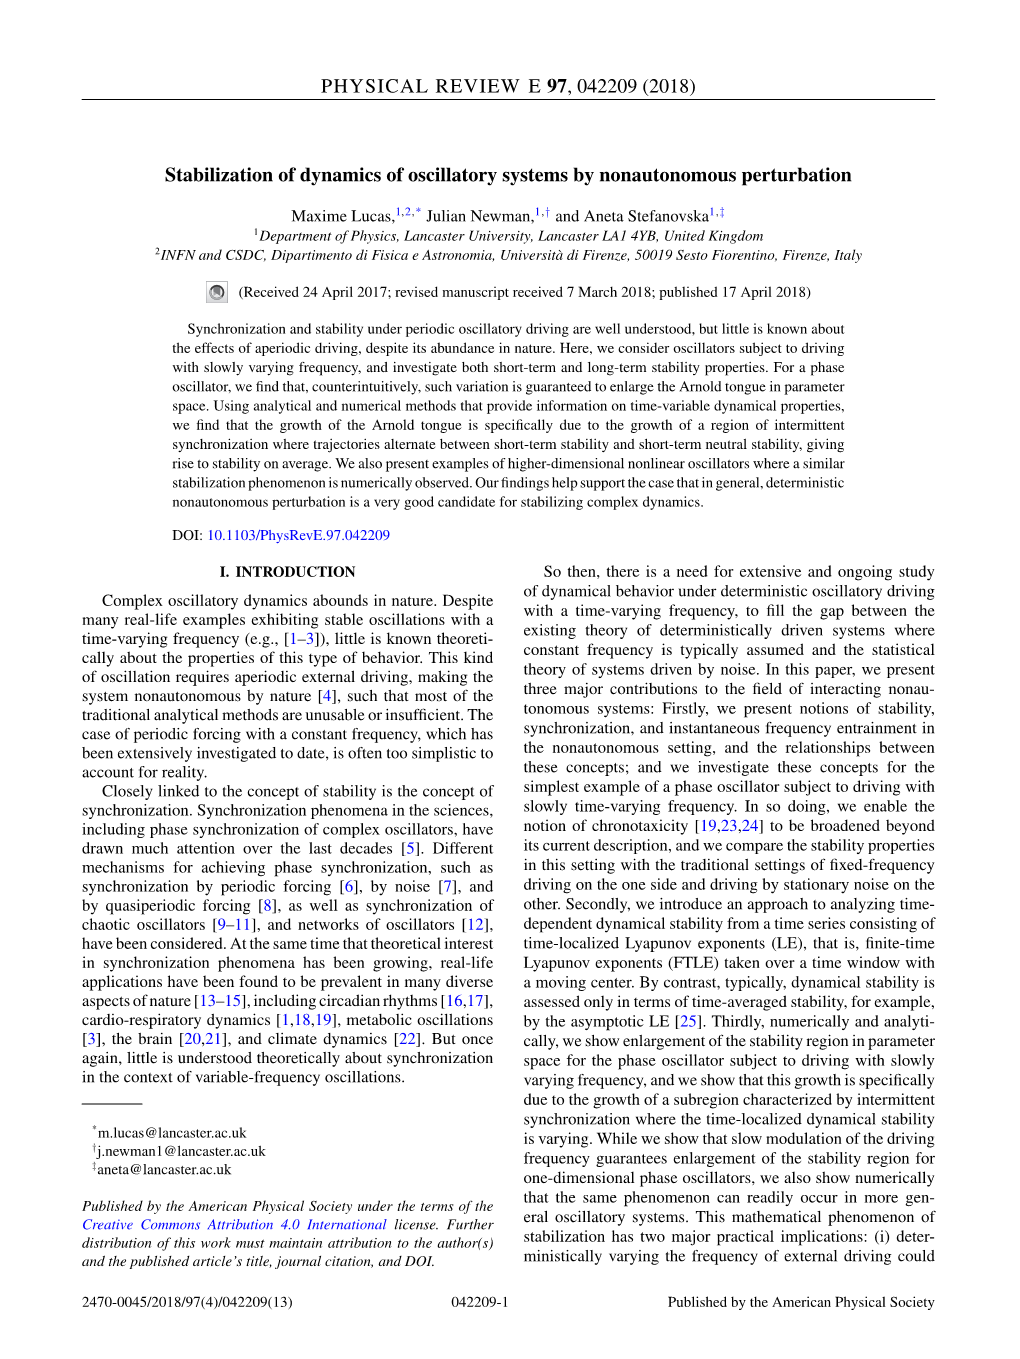 Stabilization of Dynamics of Oscillatory Systems by Nonautonomous Perturbation